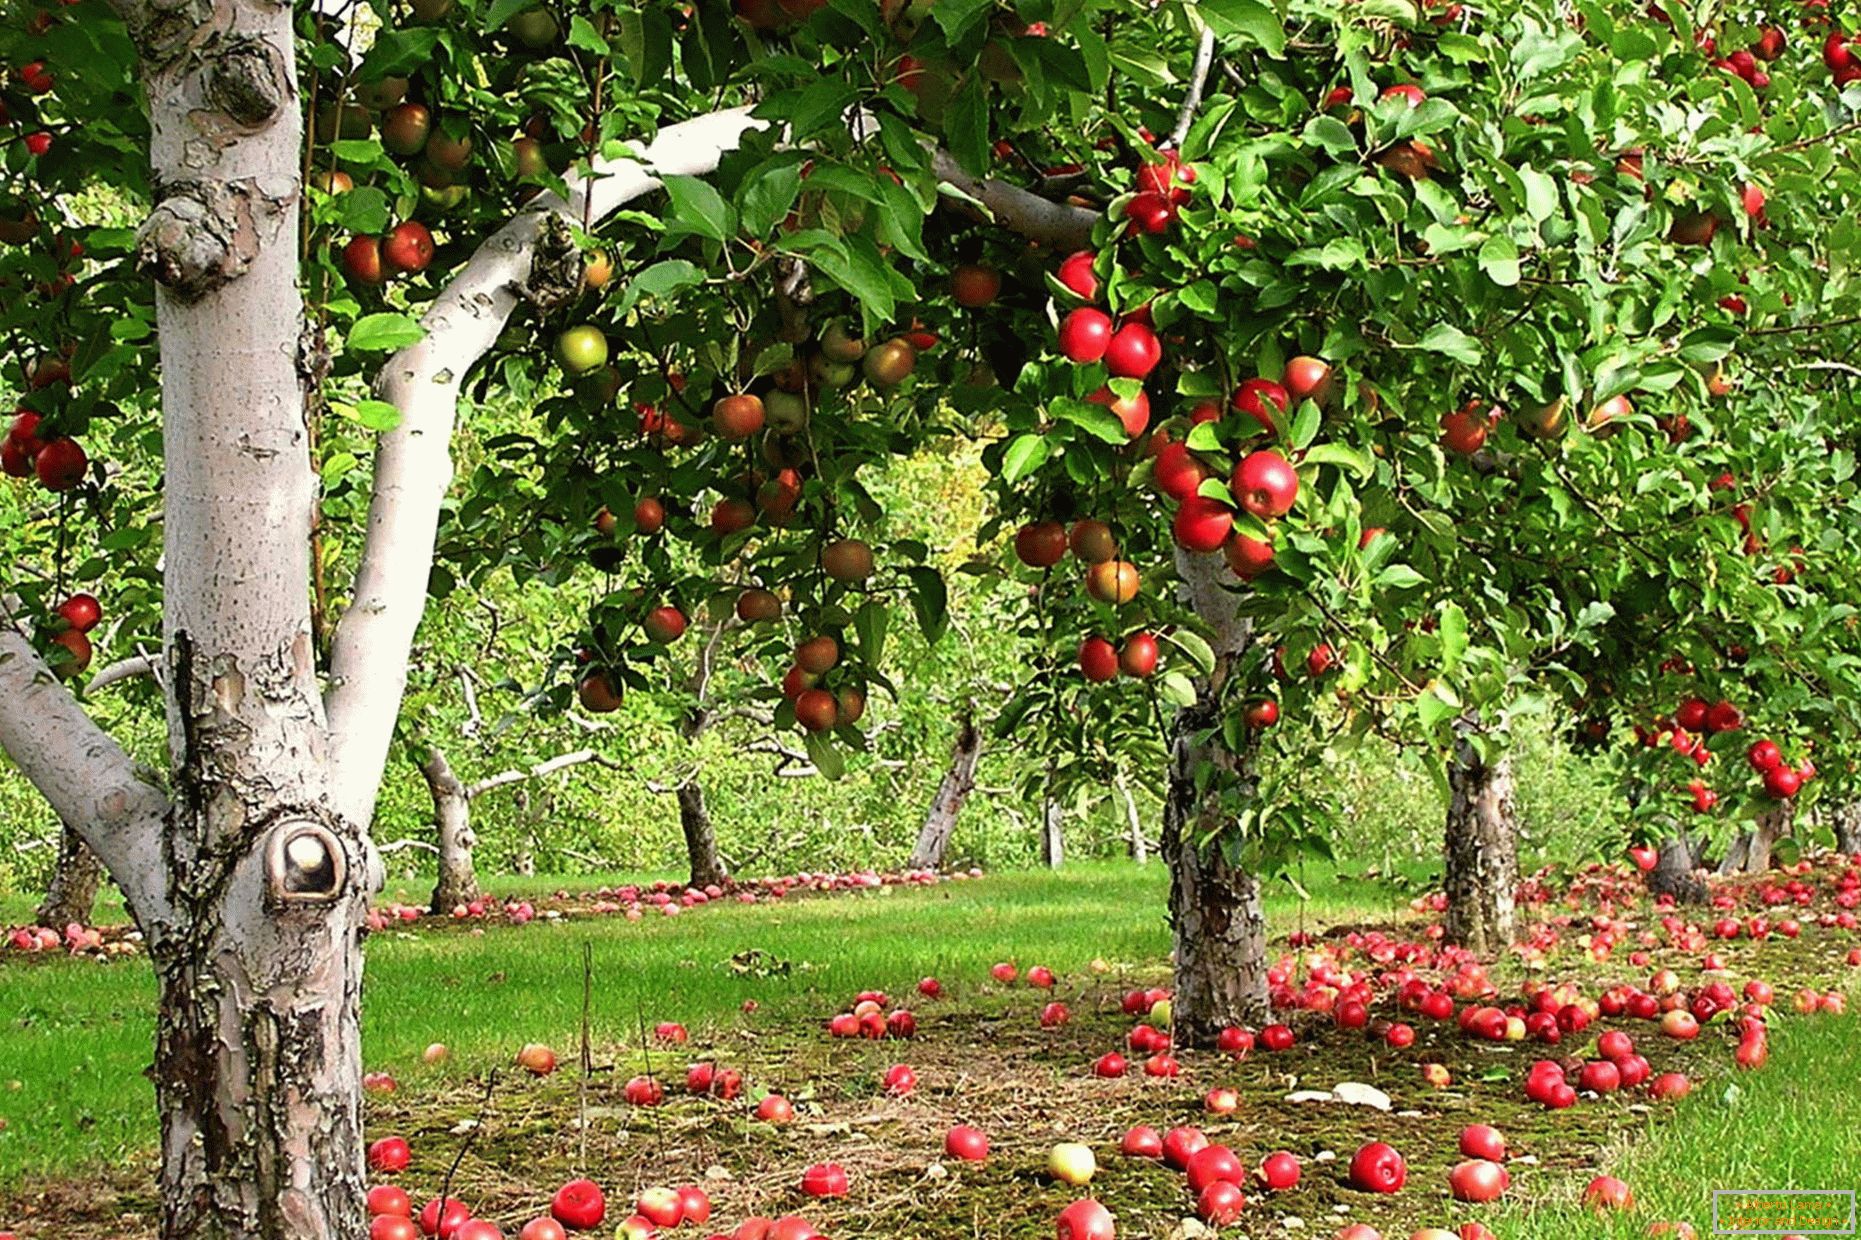 Ogród jabłoni w kraju